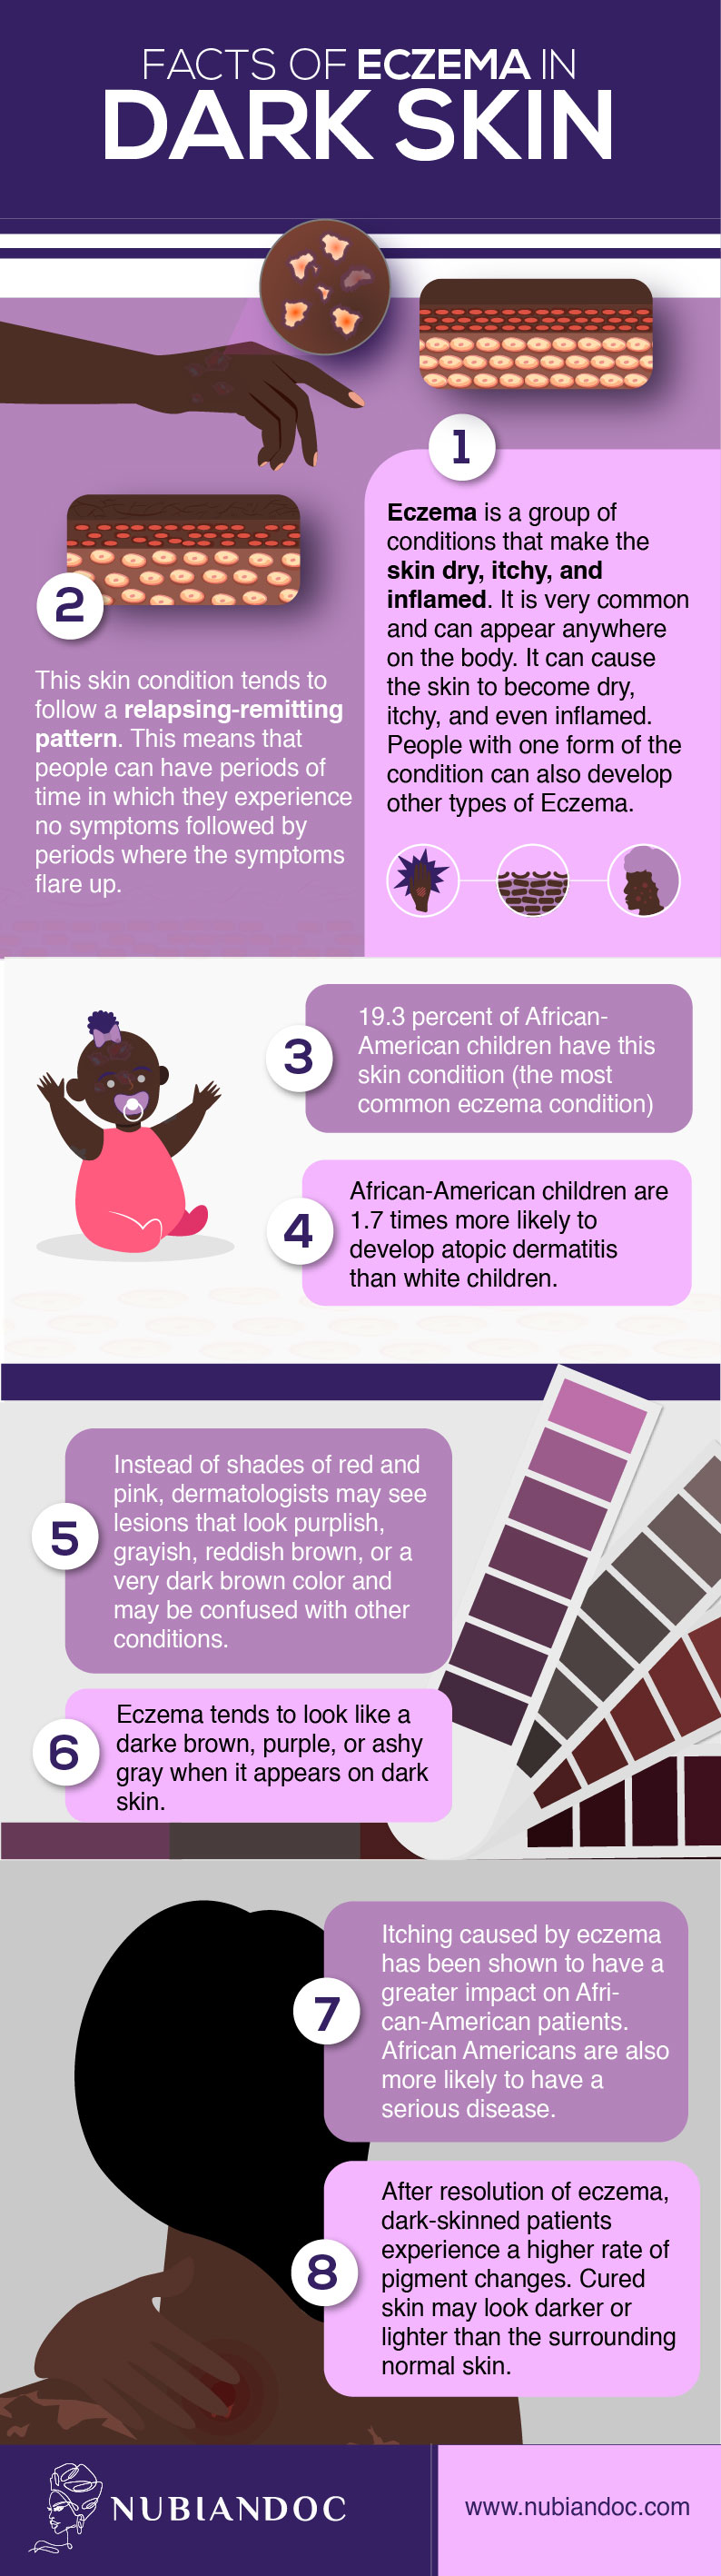 facts of eczema in dark skin